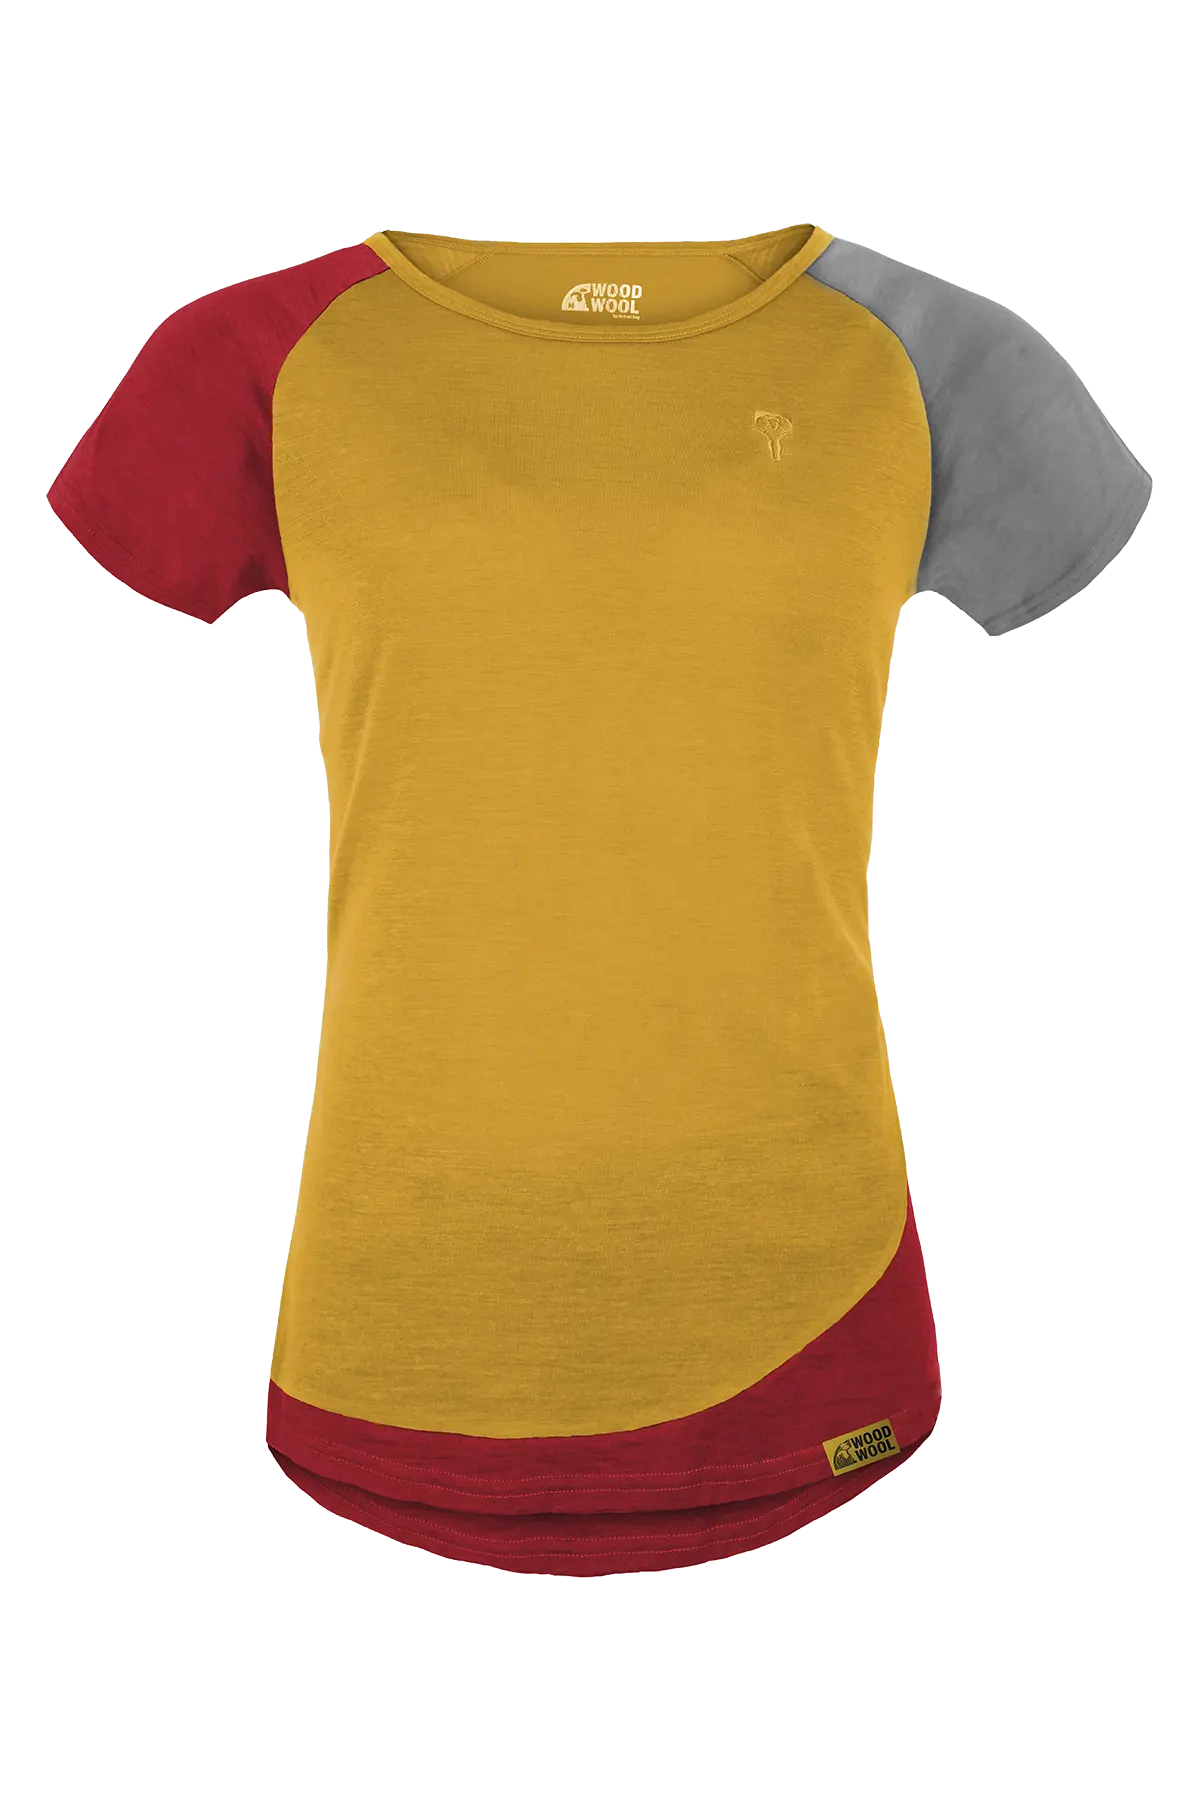 gruezi-bag-woodwool-t-shirt-lady-janeway-2200-2204-2200-6002-daizy-daze-yellow-amainfrei Kopie